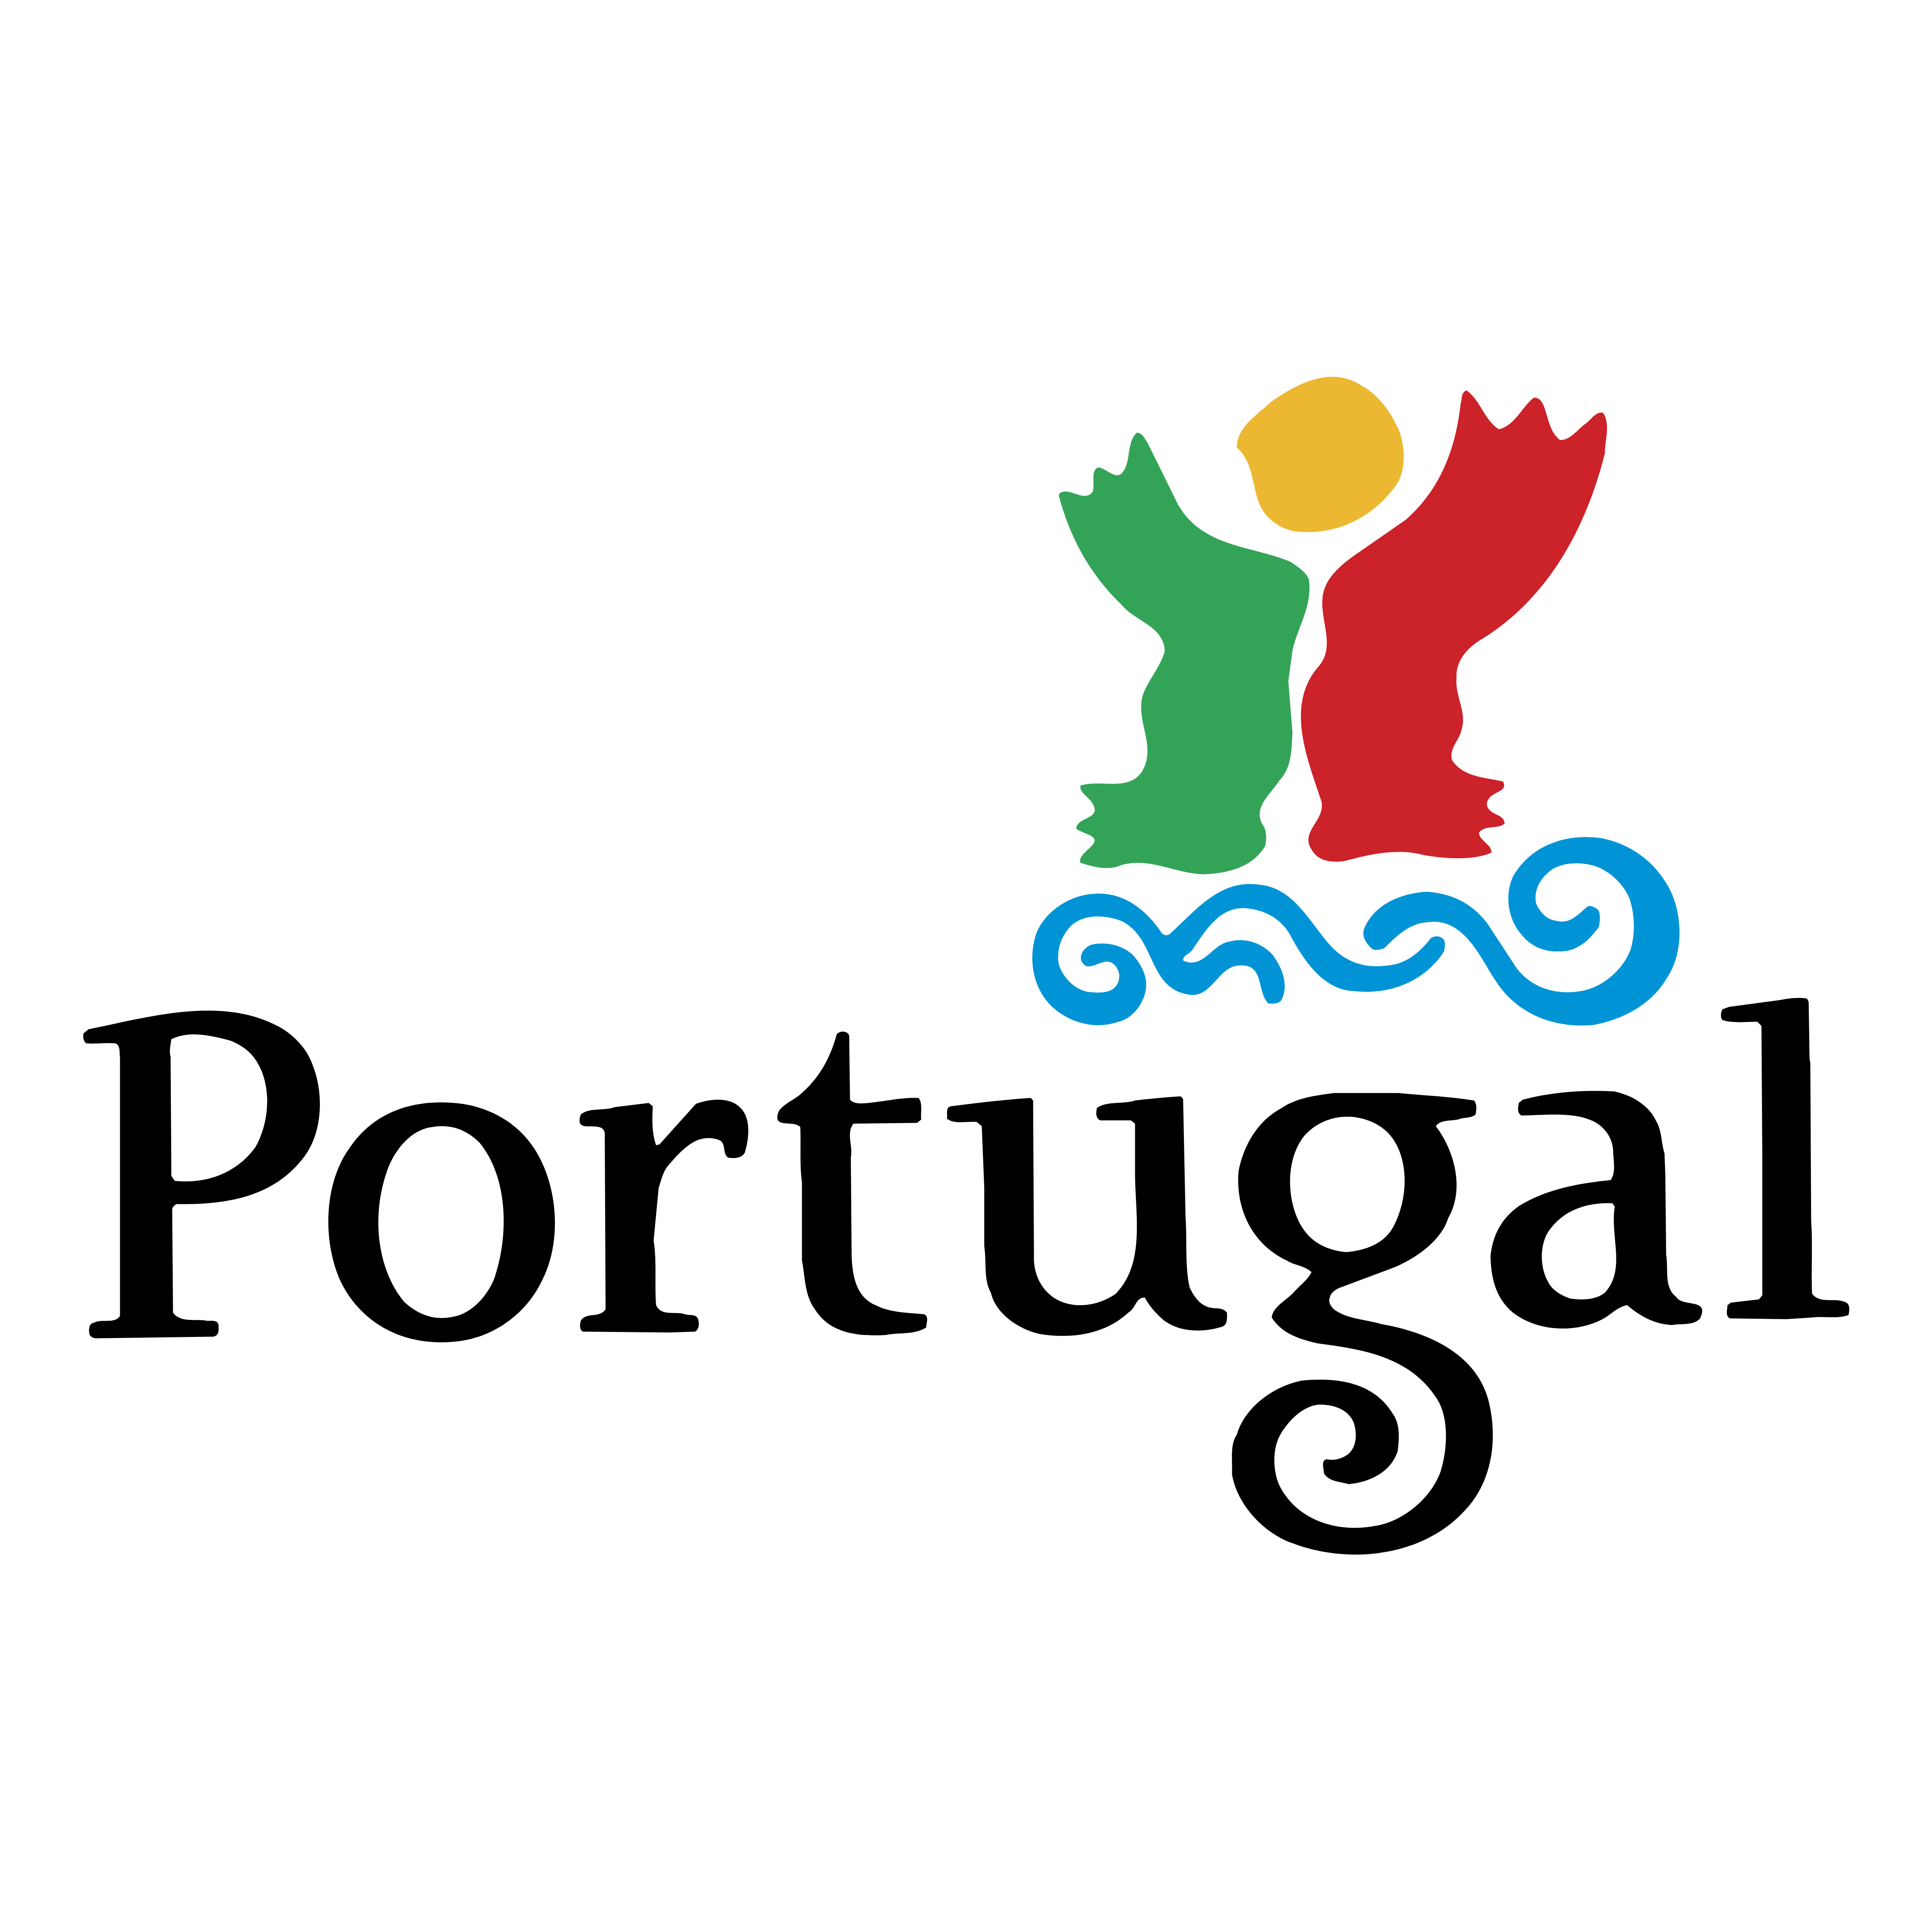 tourism slogan of portugal